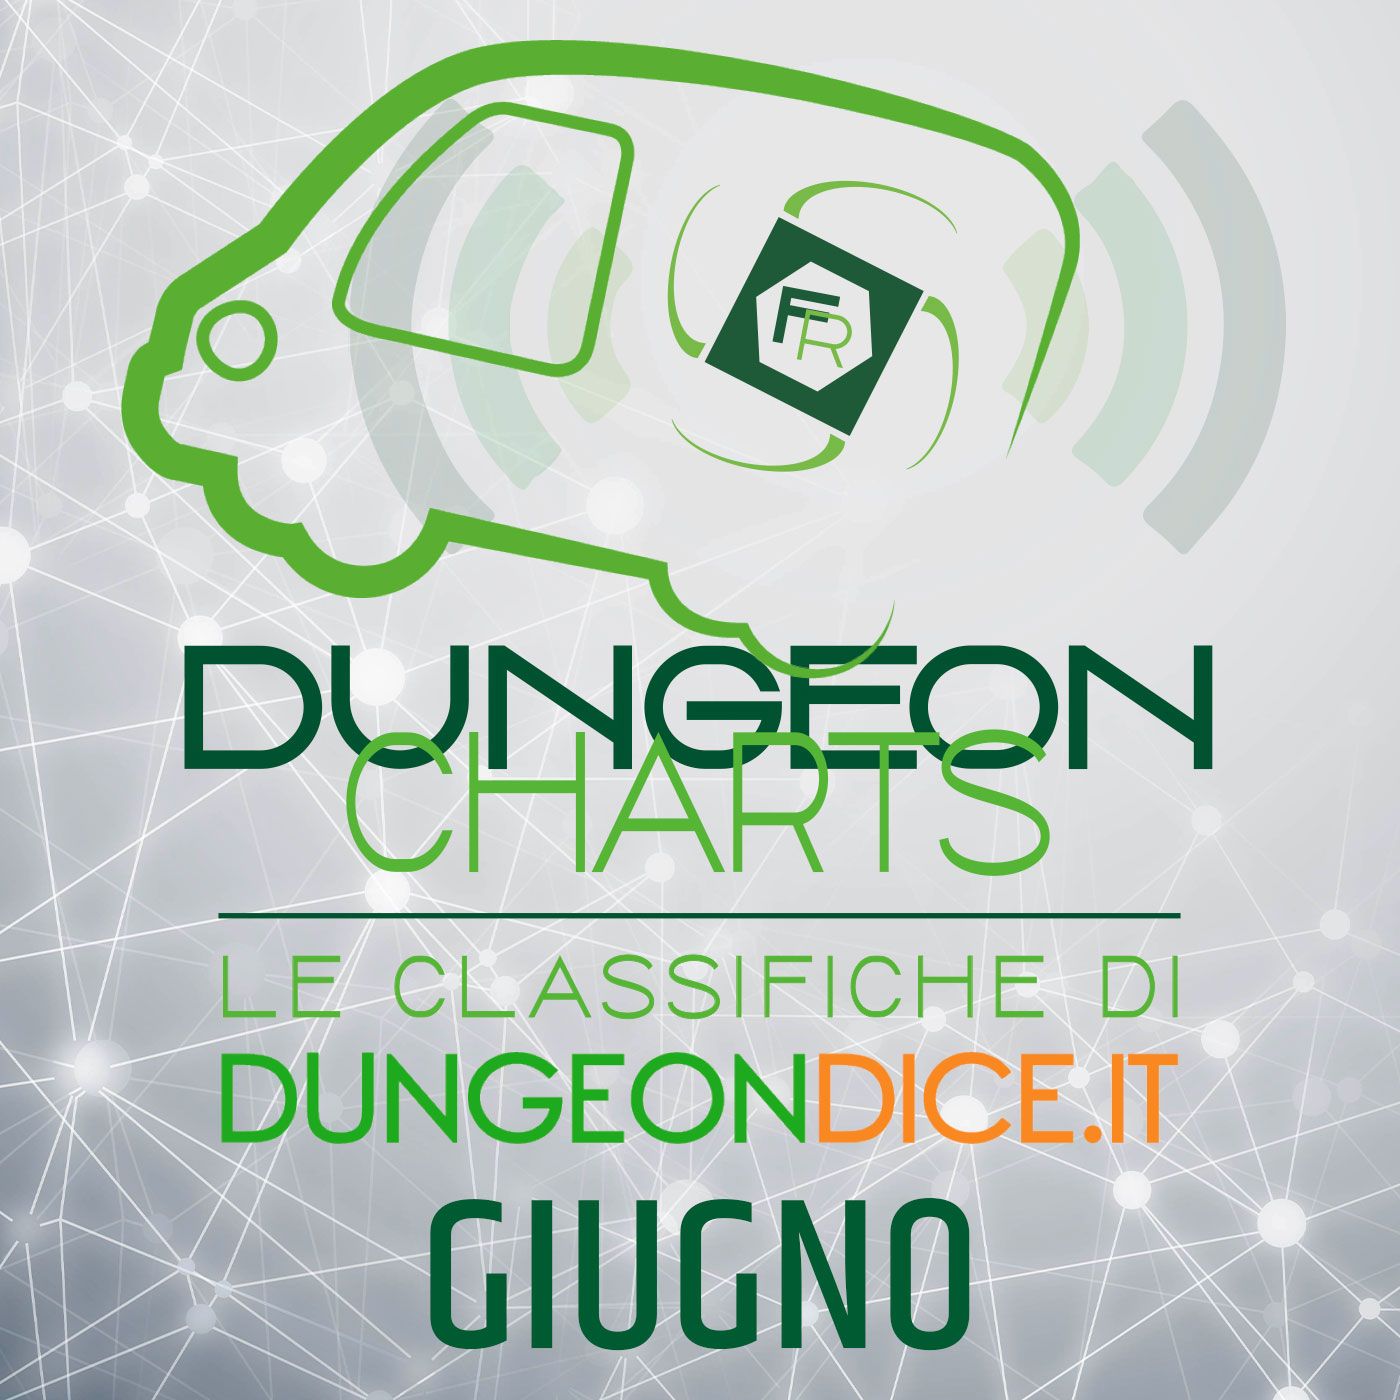 Dungeon Charts - Giugno 2021